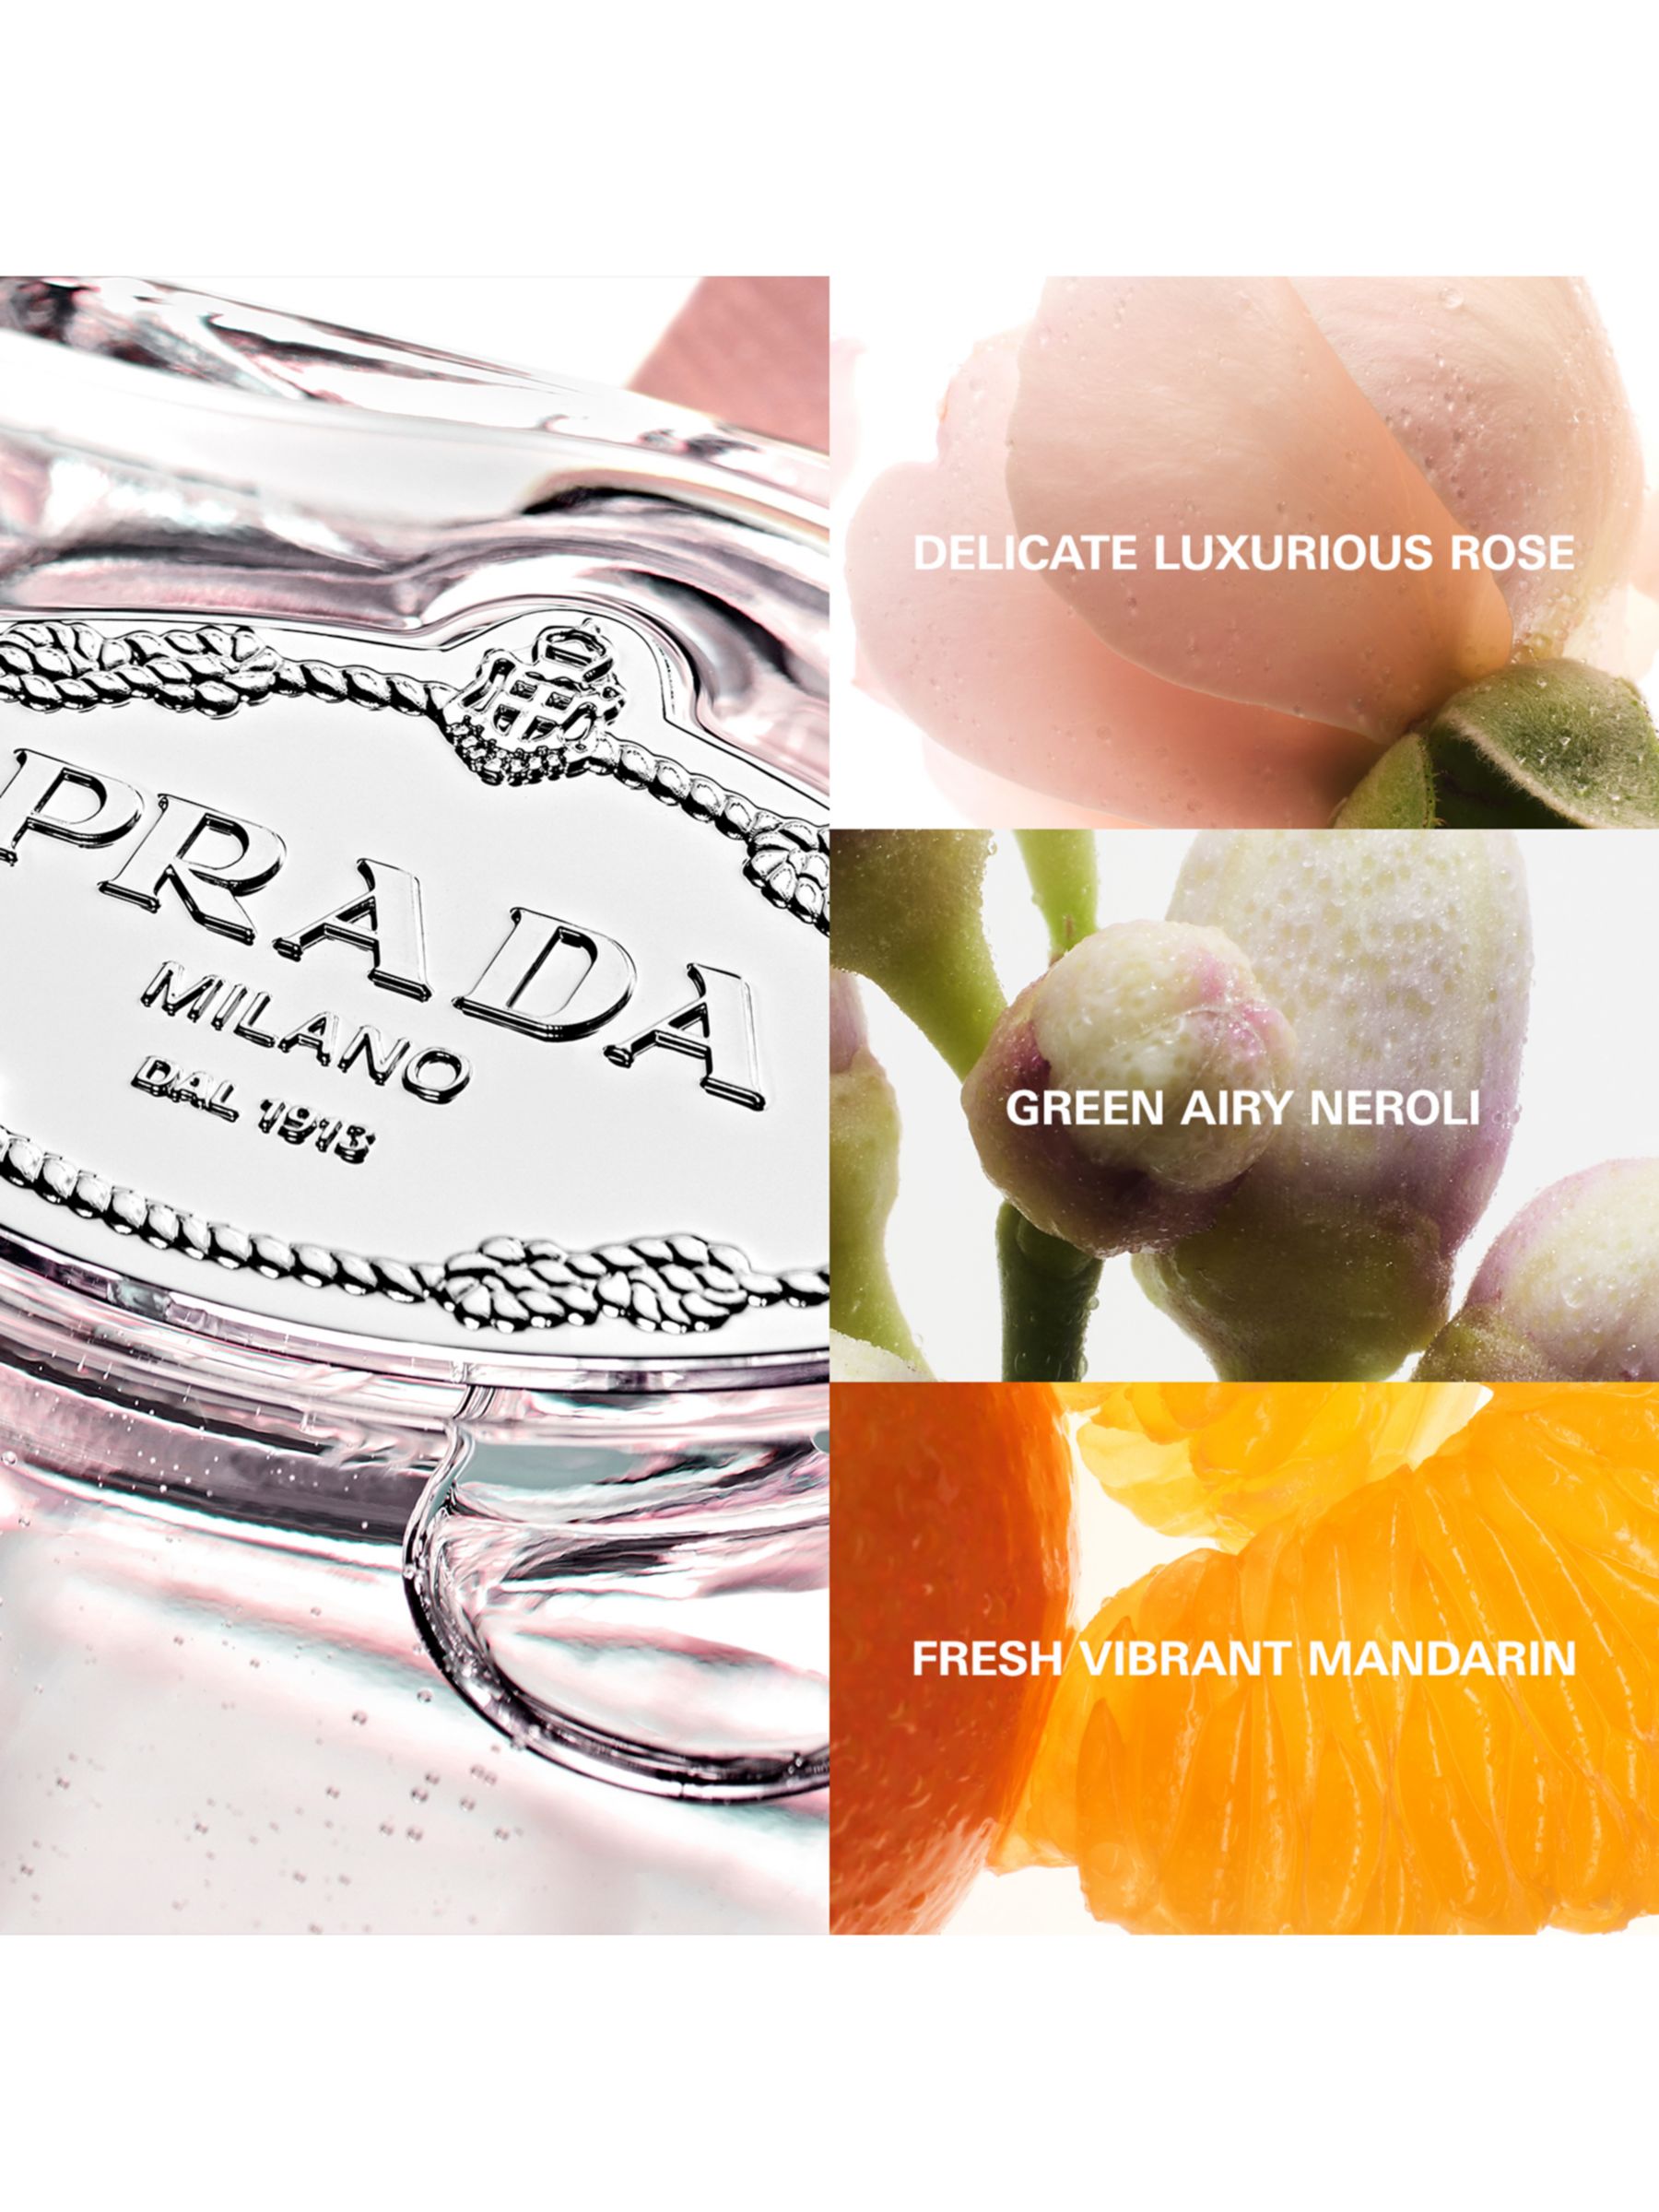 Prada Les Infusions de Prada Rose Eau de Parfum, 100ml at John Lewis &  Partners